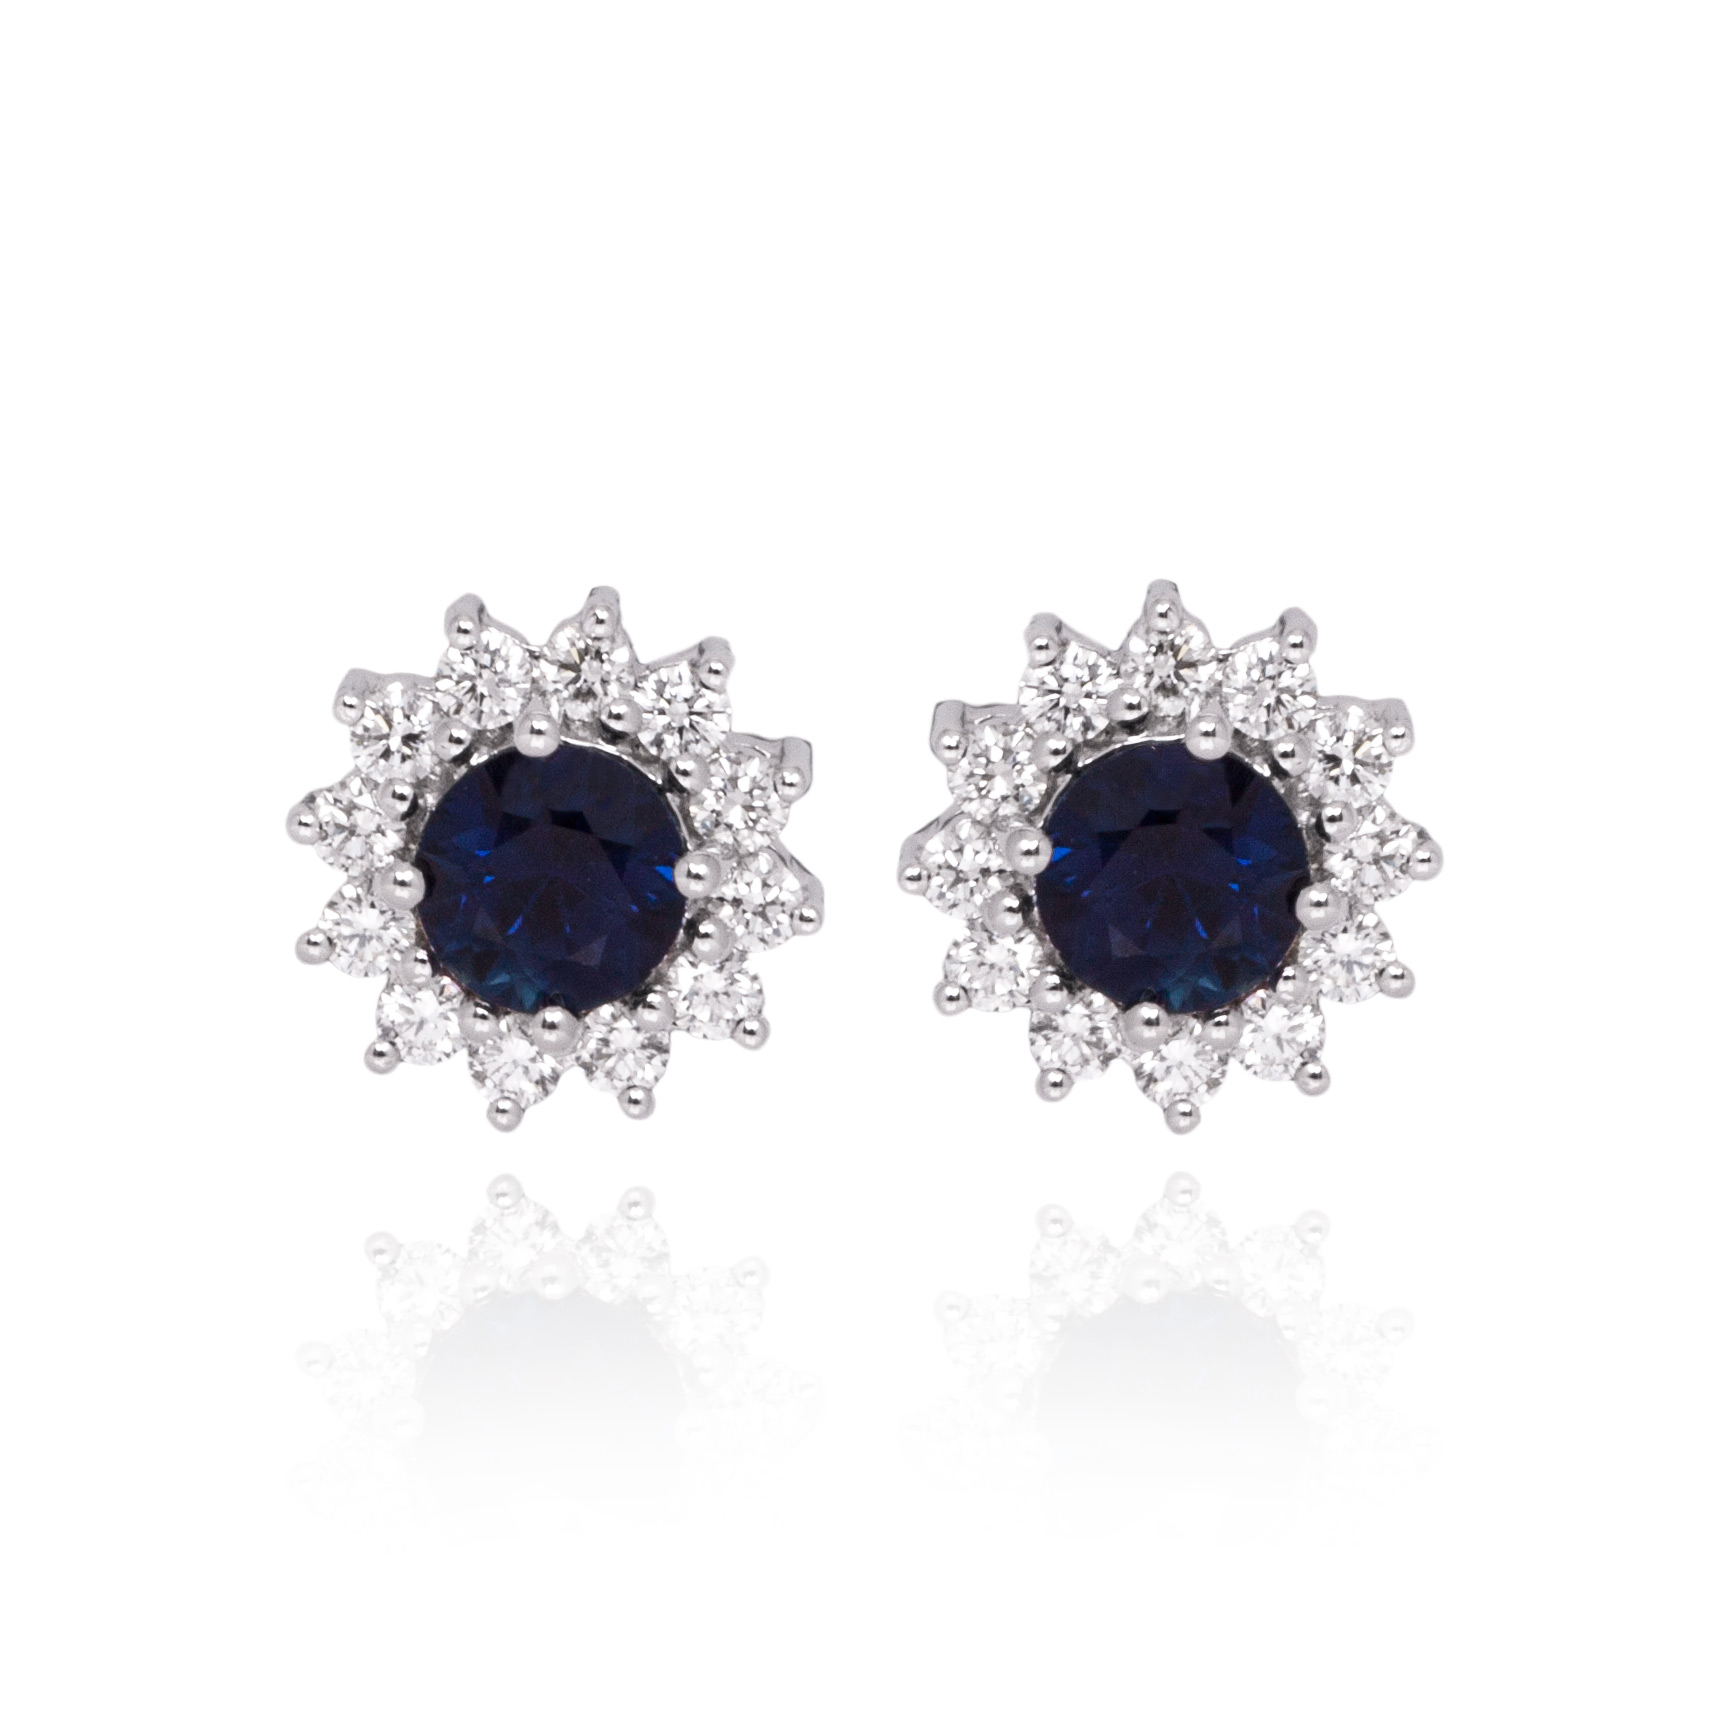 181-continental-jewels-manufacturers-earrings-cje000181-18k-white-gold-vvs1-diamonds-blue-sapphire-customised-earrings.jpg